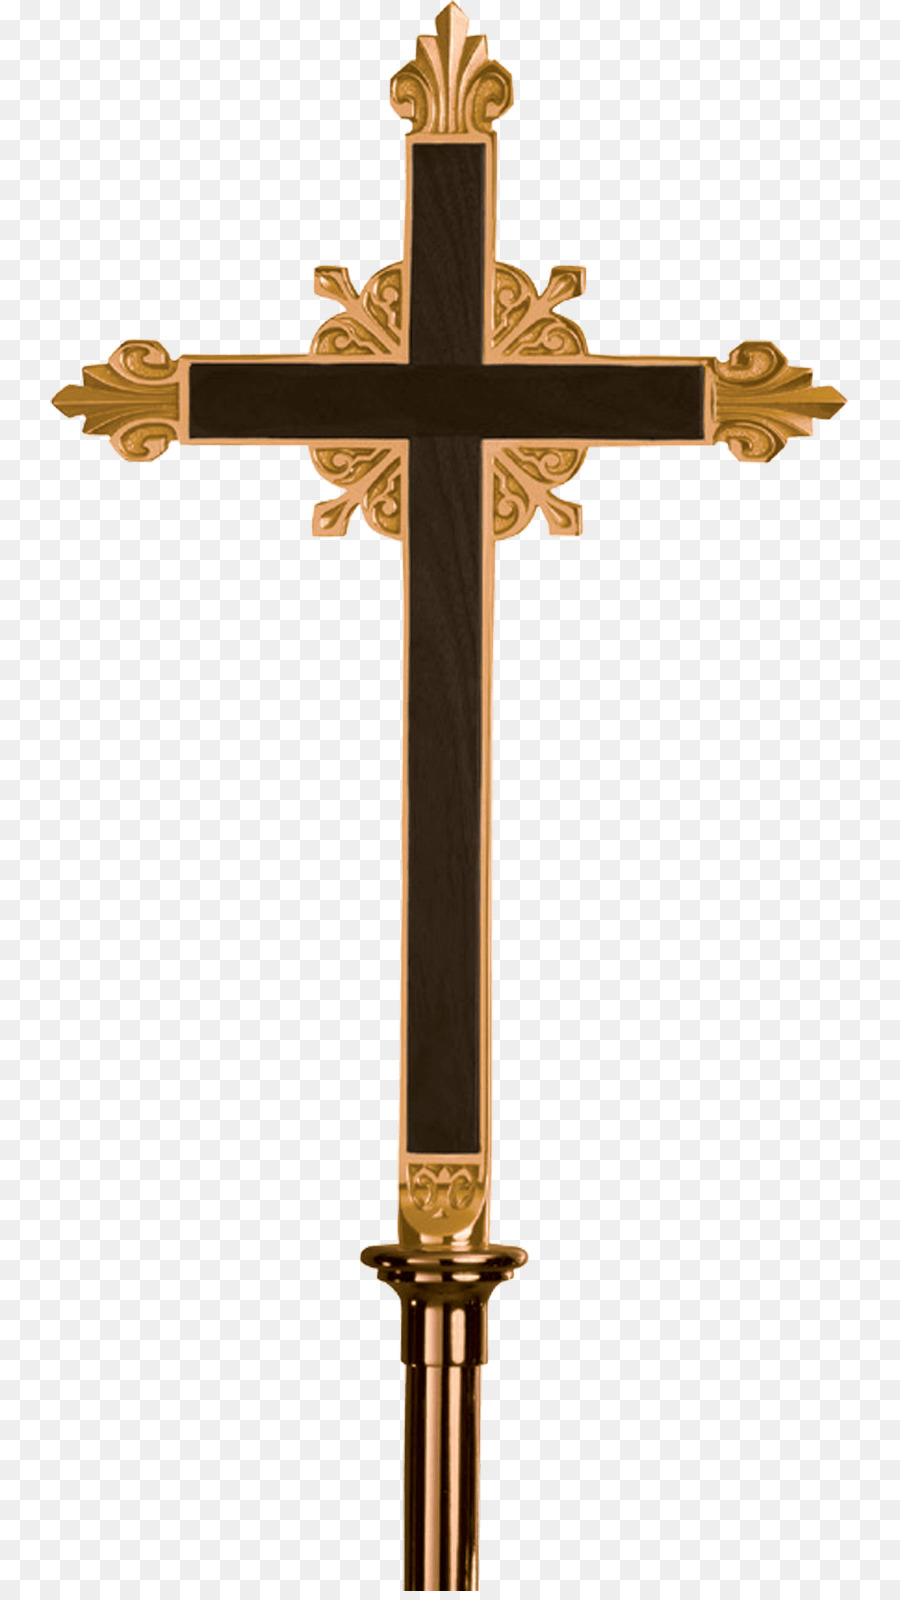 Crucifix - wooden cross png download - 800*1591 - Free Transparent Crucifix png Download.